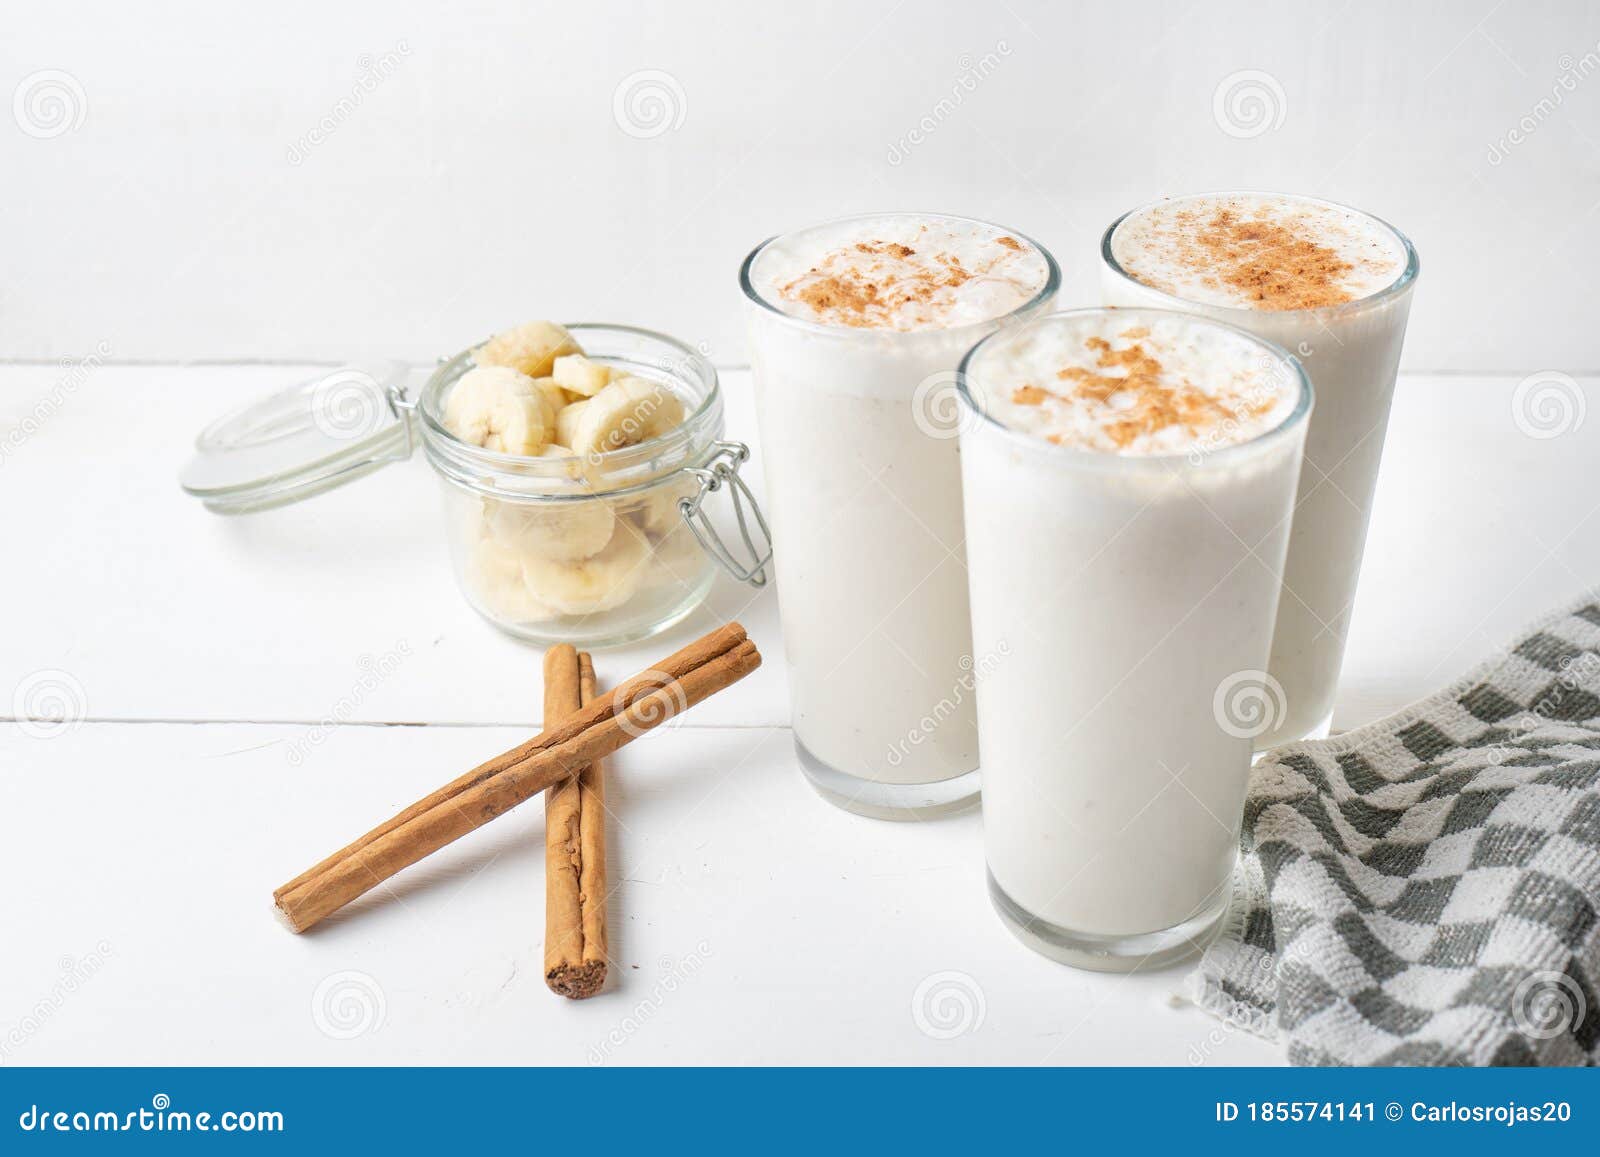 banana smothie or milkshake with cinnamon on white  background